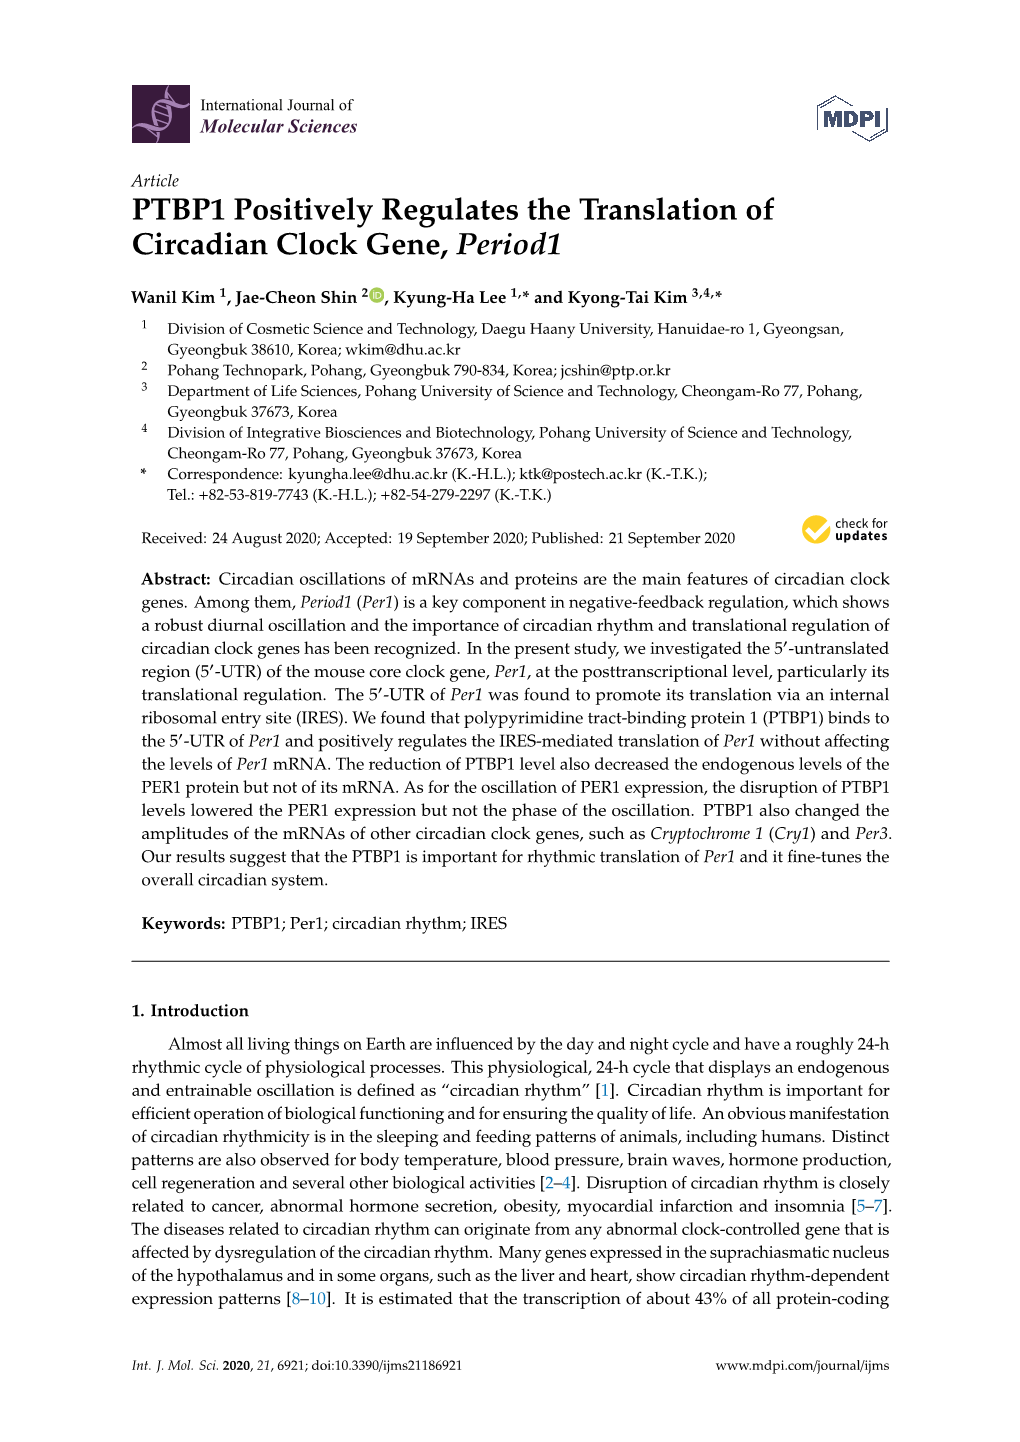 PTBP1 Positively Regulates the Translation of Circadian Clock Gene, Period1